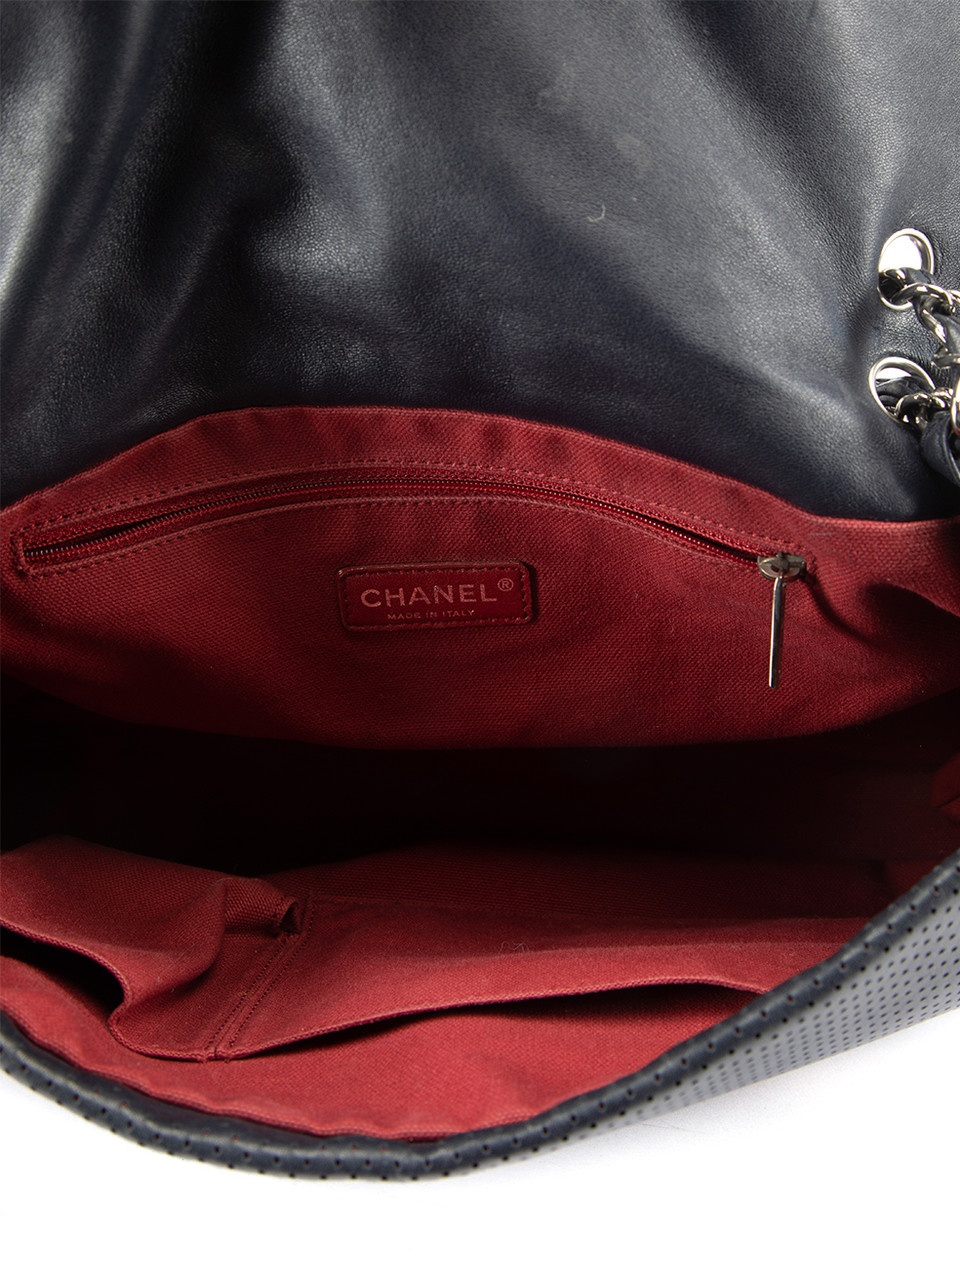 Chanel 2008/2009 CC Turnlock Perforated Shoulder Bag